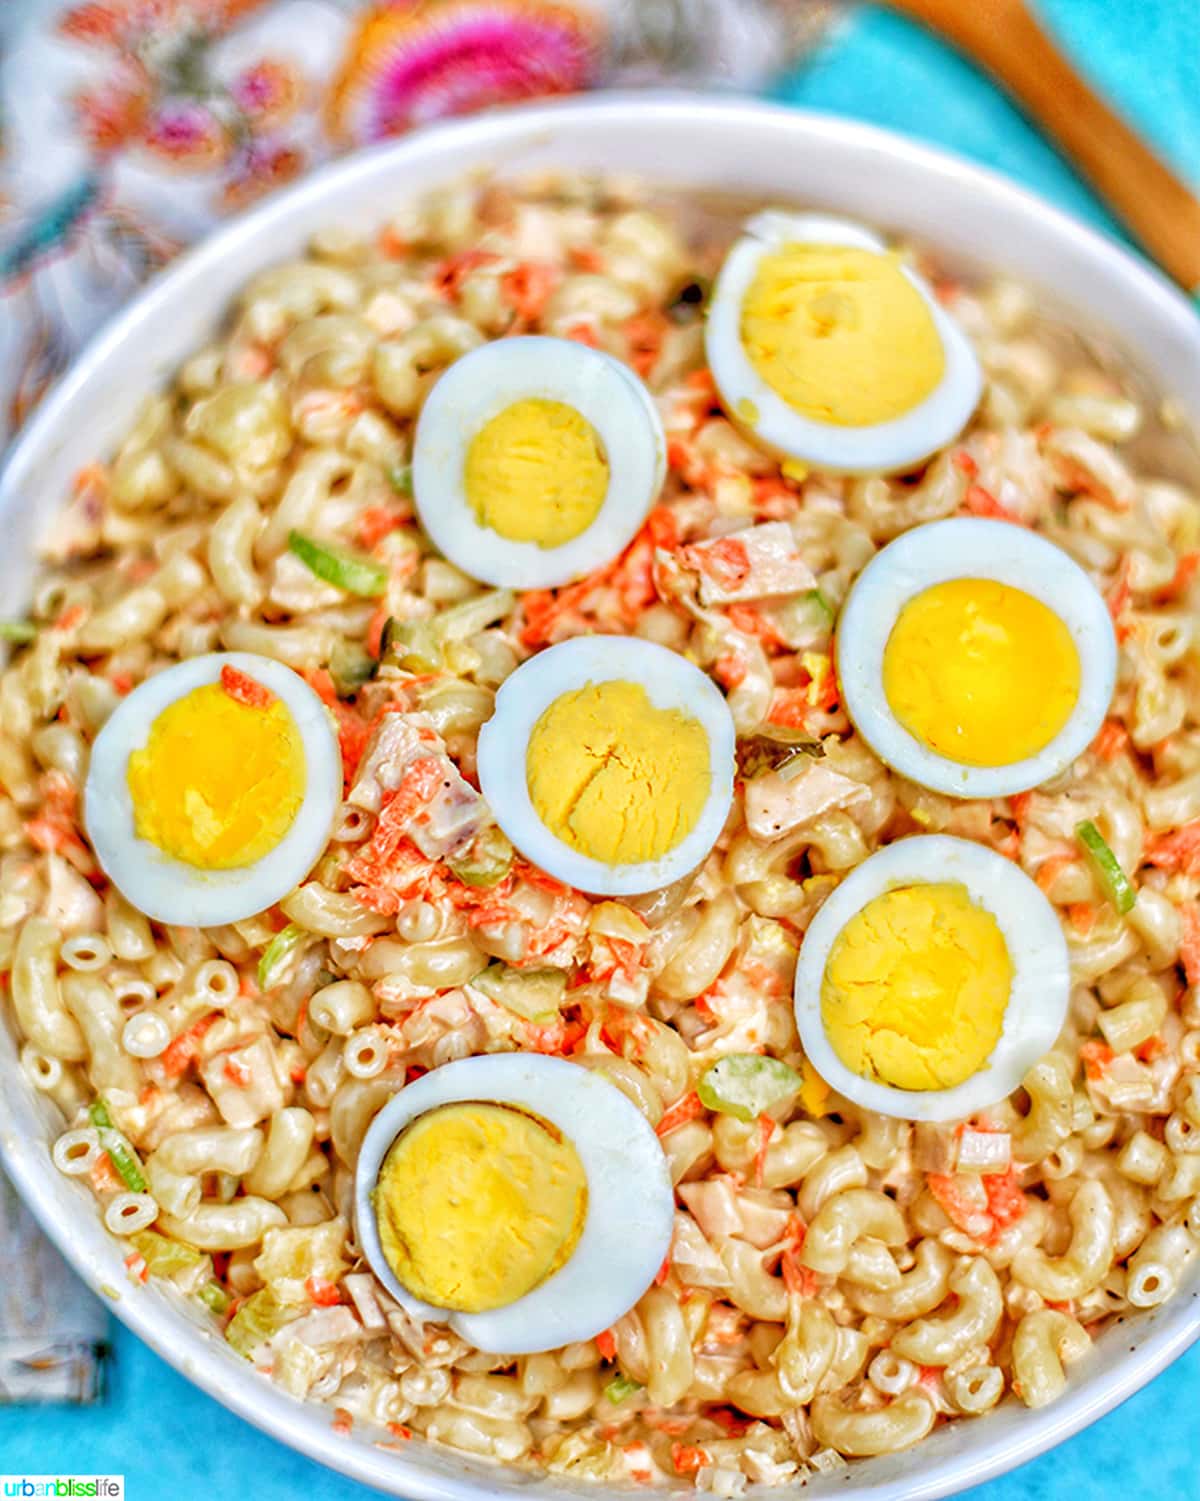 Filipino Macaroni Salad - macaroni, carrots, chicken, celery, pineapple, sliced hard-boiled egg- in a bowl.